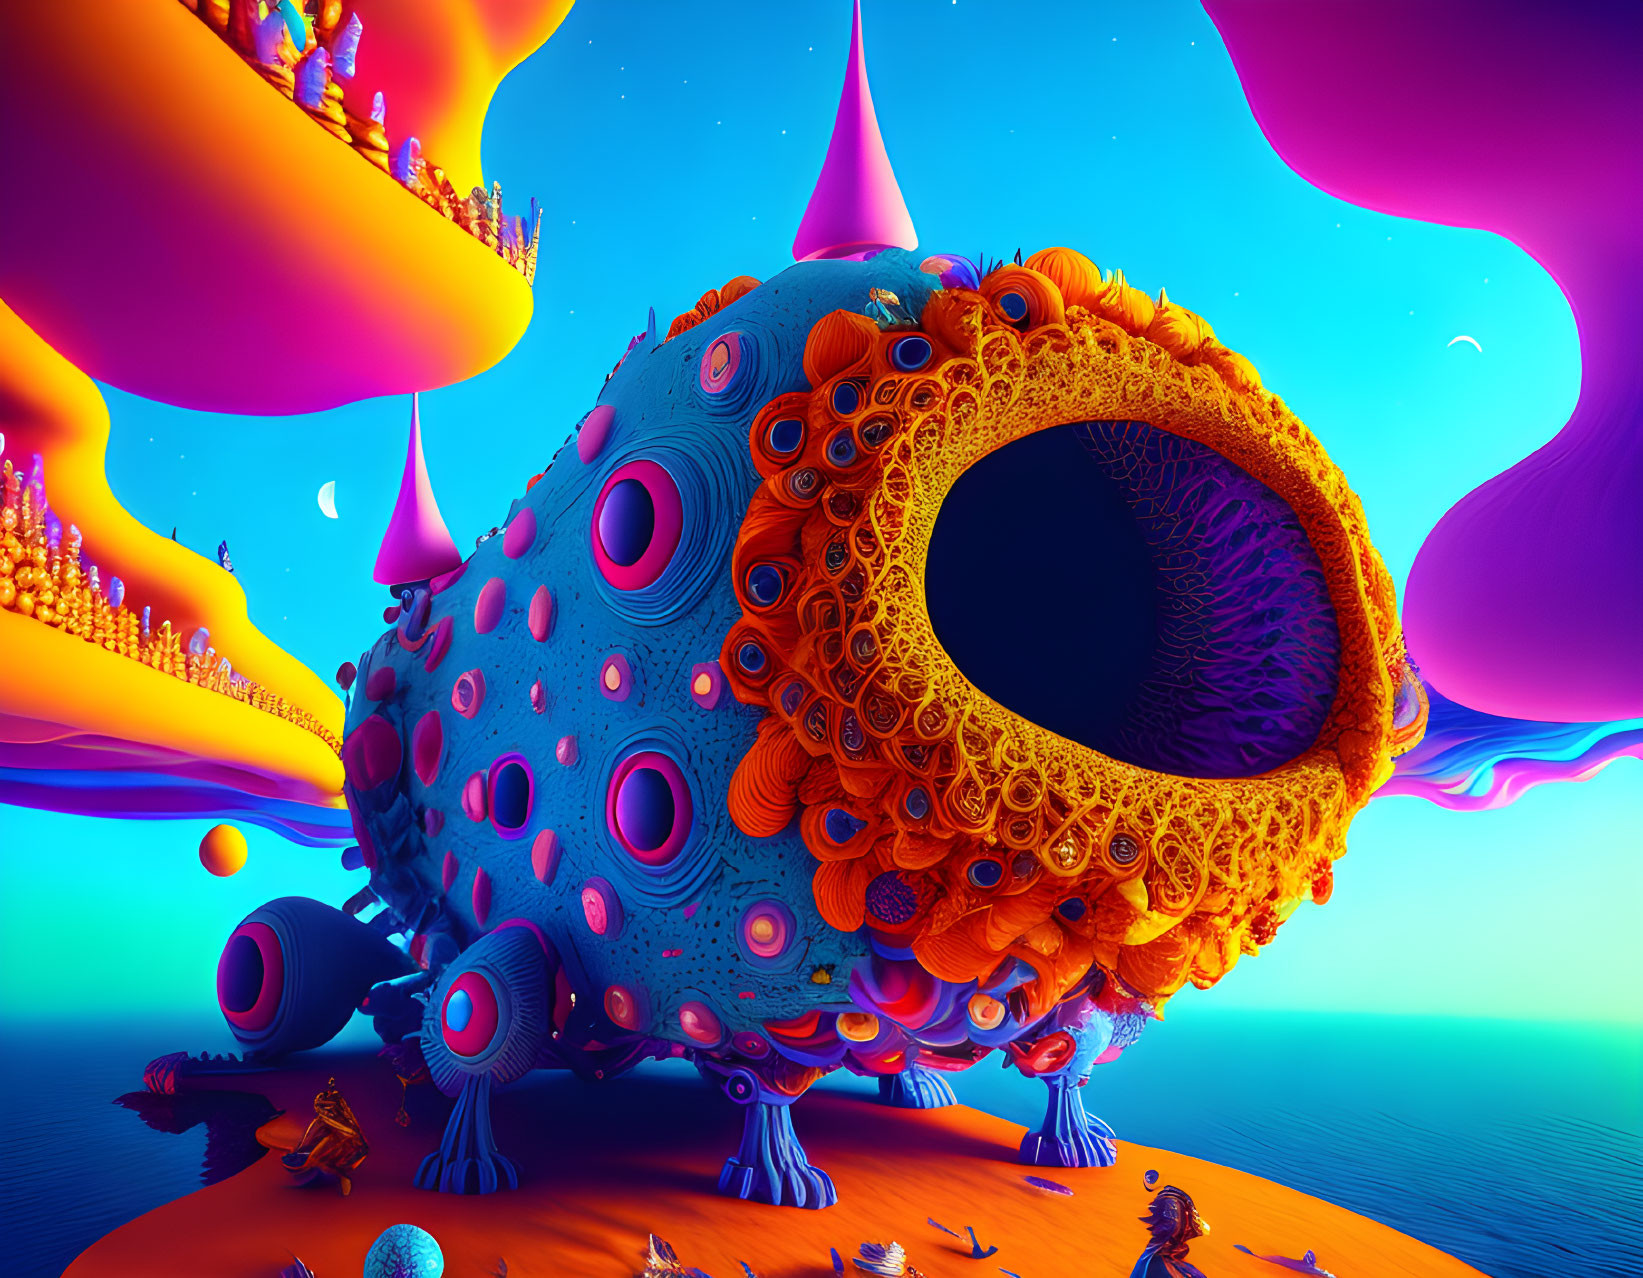 Colorful Blob-Like Creature in Surreal Landscape